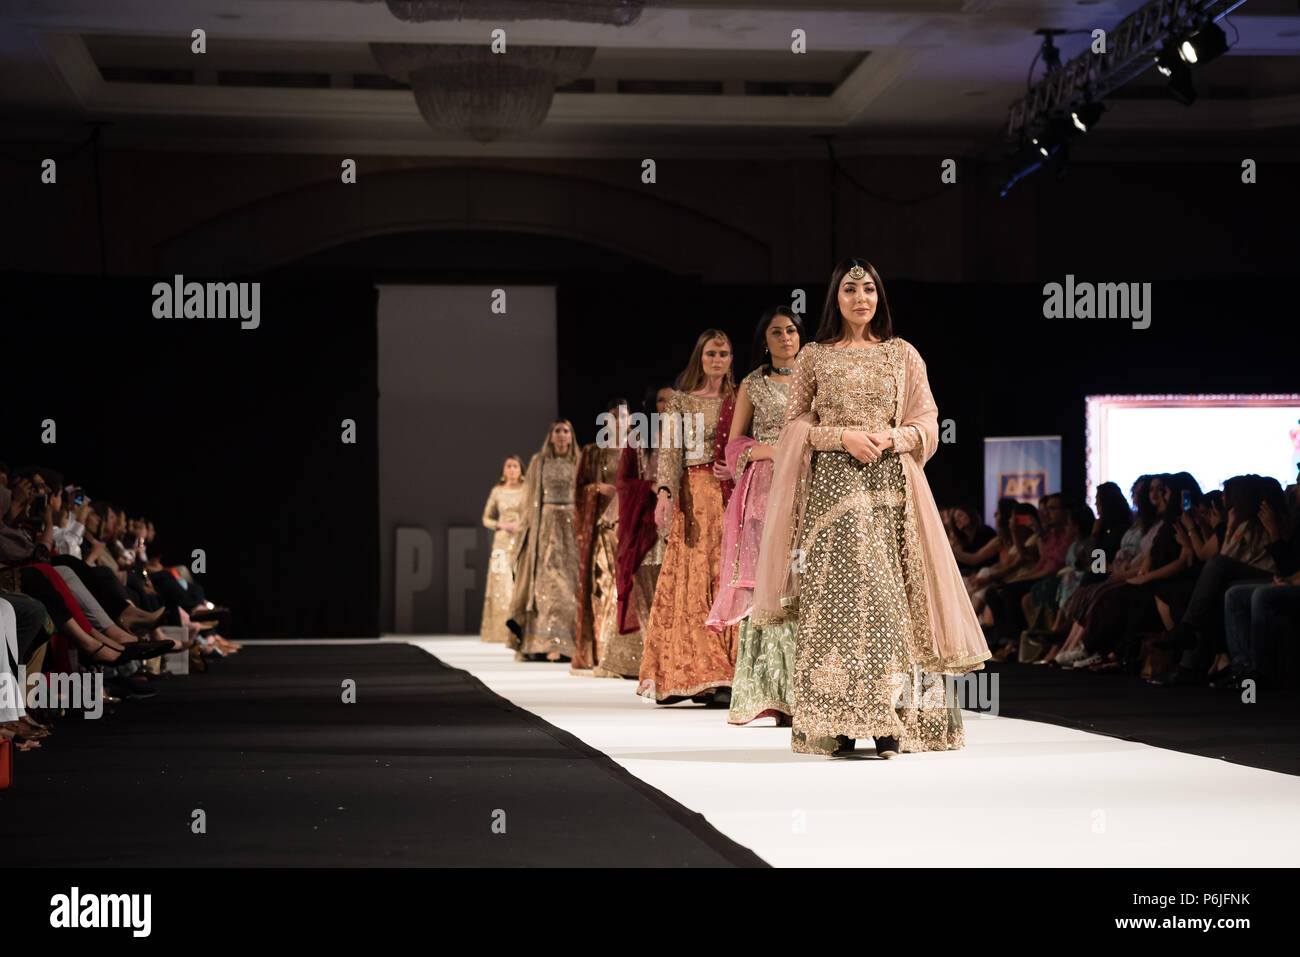 London, UK, 30. Juni 2018. Die offizielle Eröffnung catwalk von Pakistan Fashion Week. Designer präsentieren Chirawan Lewis, Maheen Khan, Aisha Imran, Faika Karim, Bushra Wahid, Sadaf Amir, komal Nasir, Laeeq Akber, Shazia KItani und Uzma Babar enthalten. Stockfoto